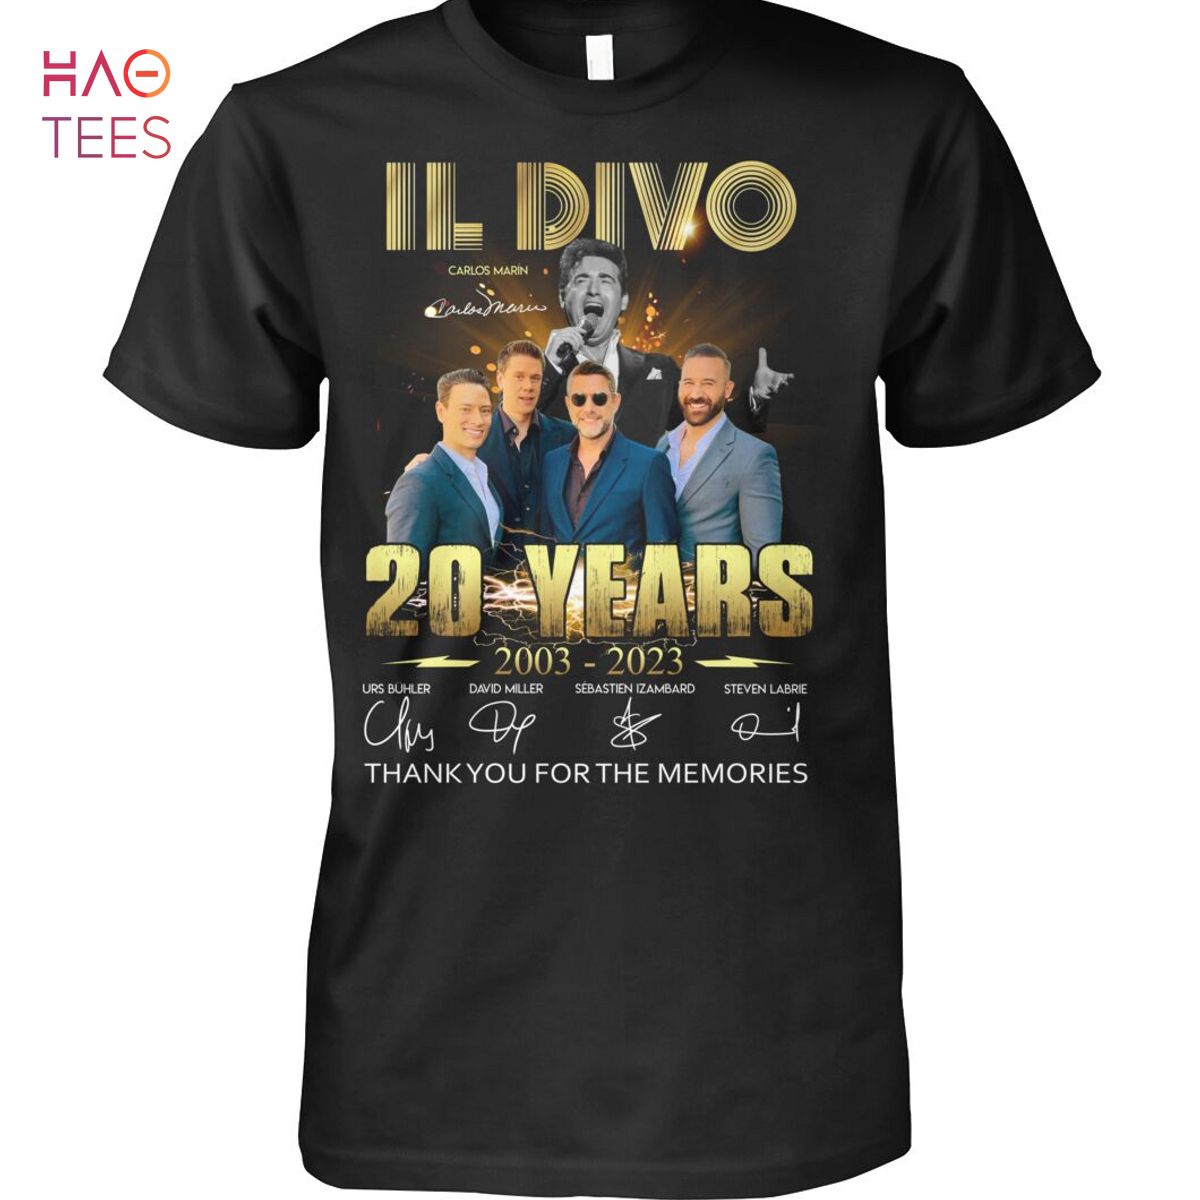 Il Divo 20 Yeras 2003-2023 Shirt Limited Edition